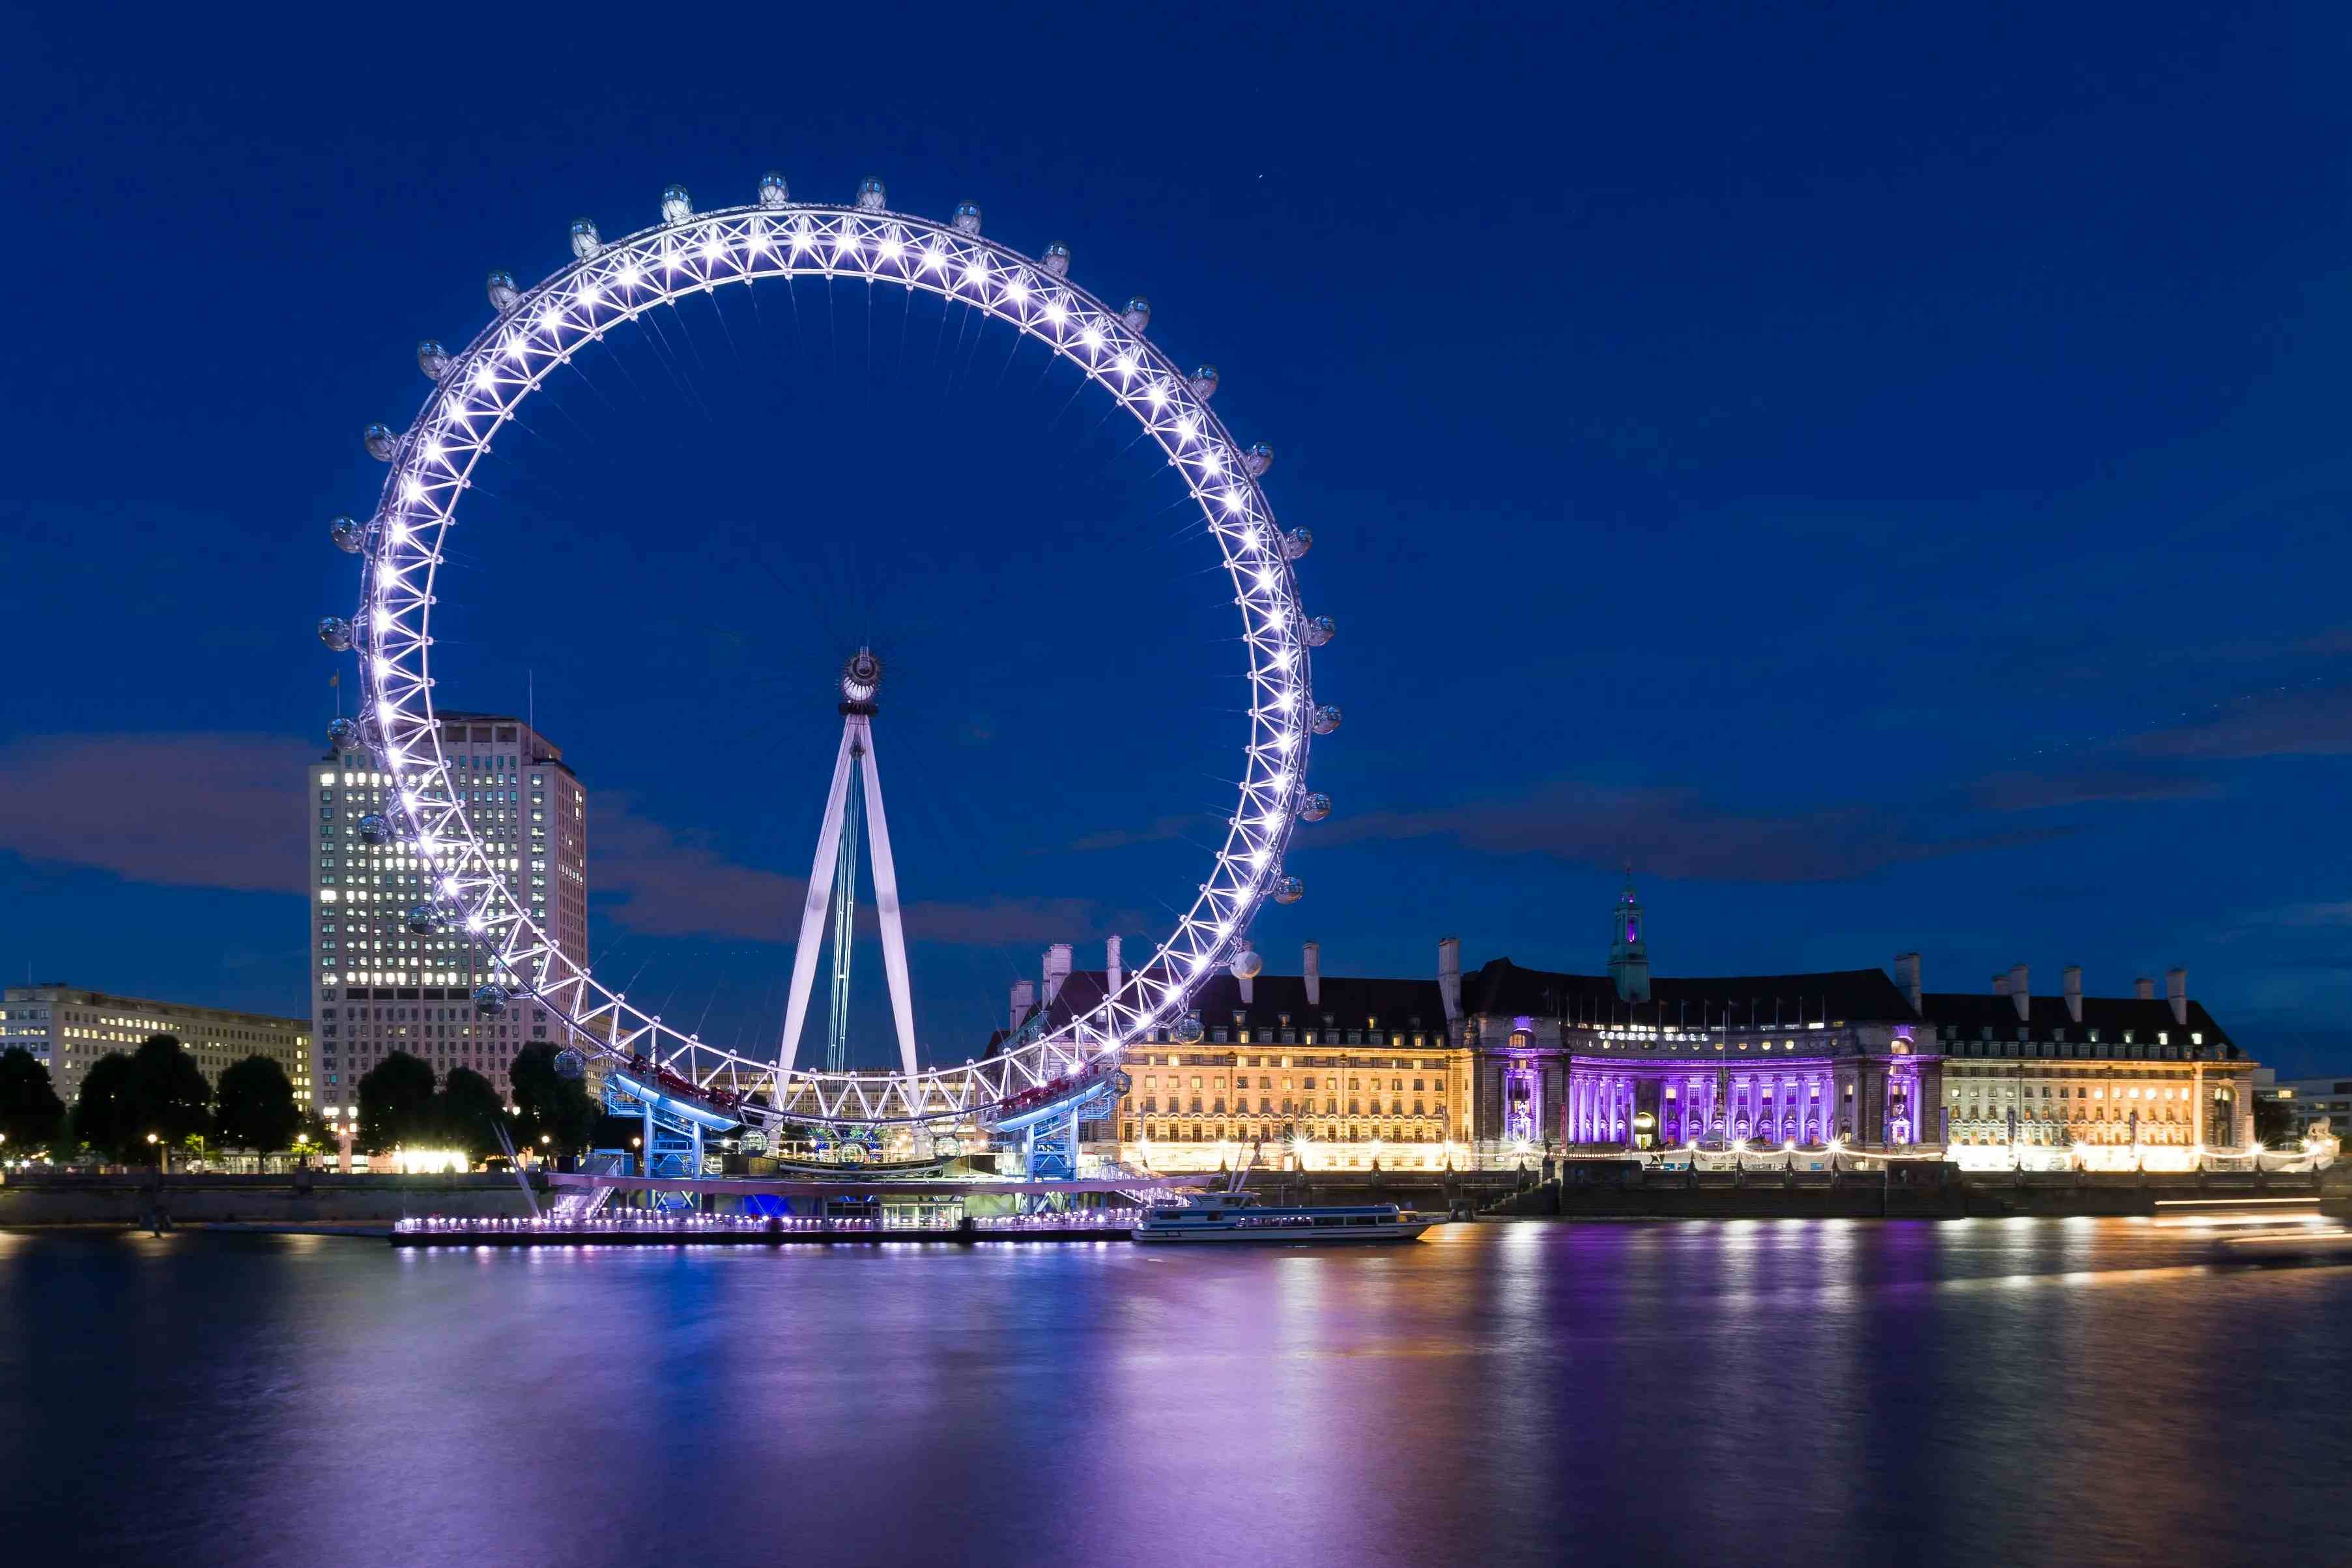 London Eye image